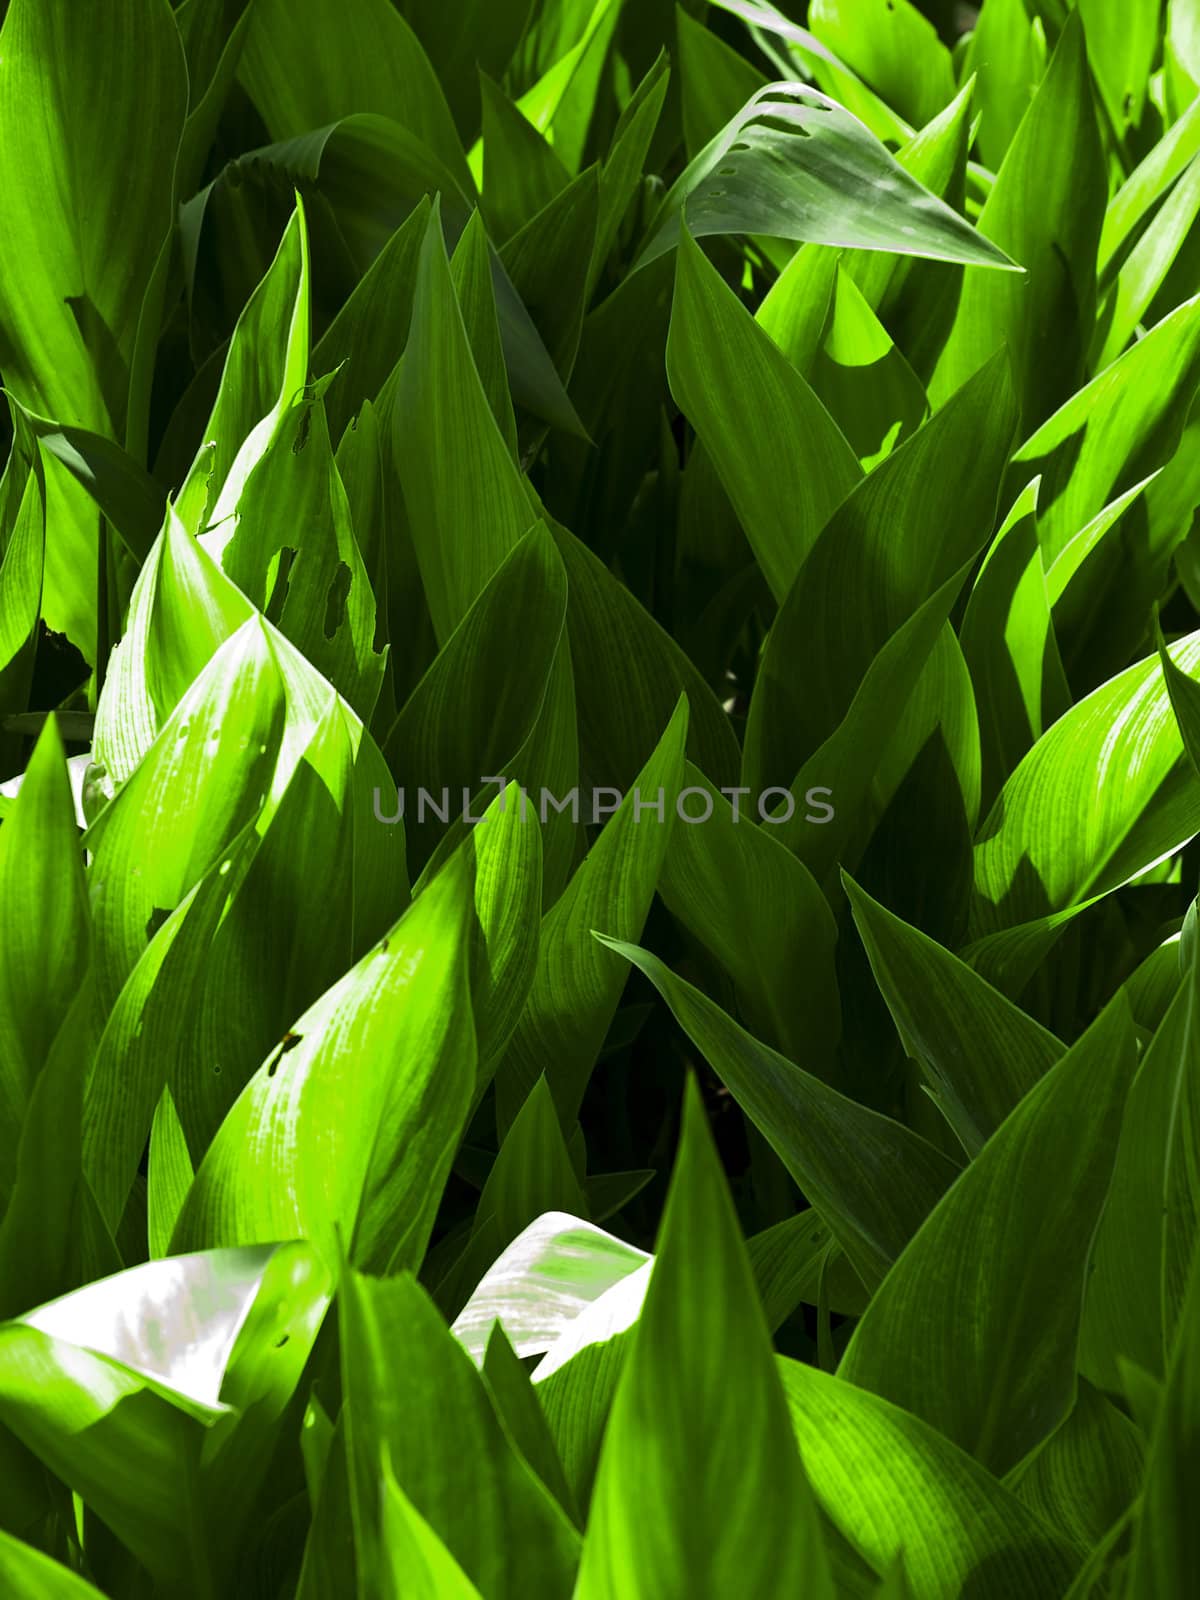 Green Foliage by PhotoWorks